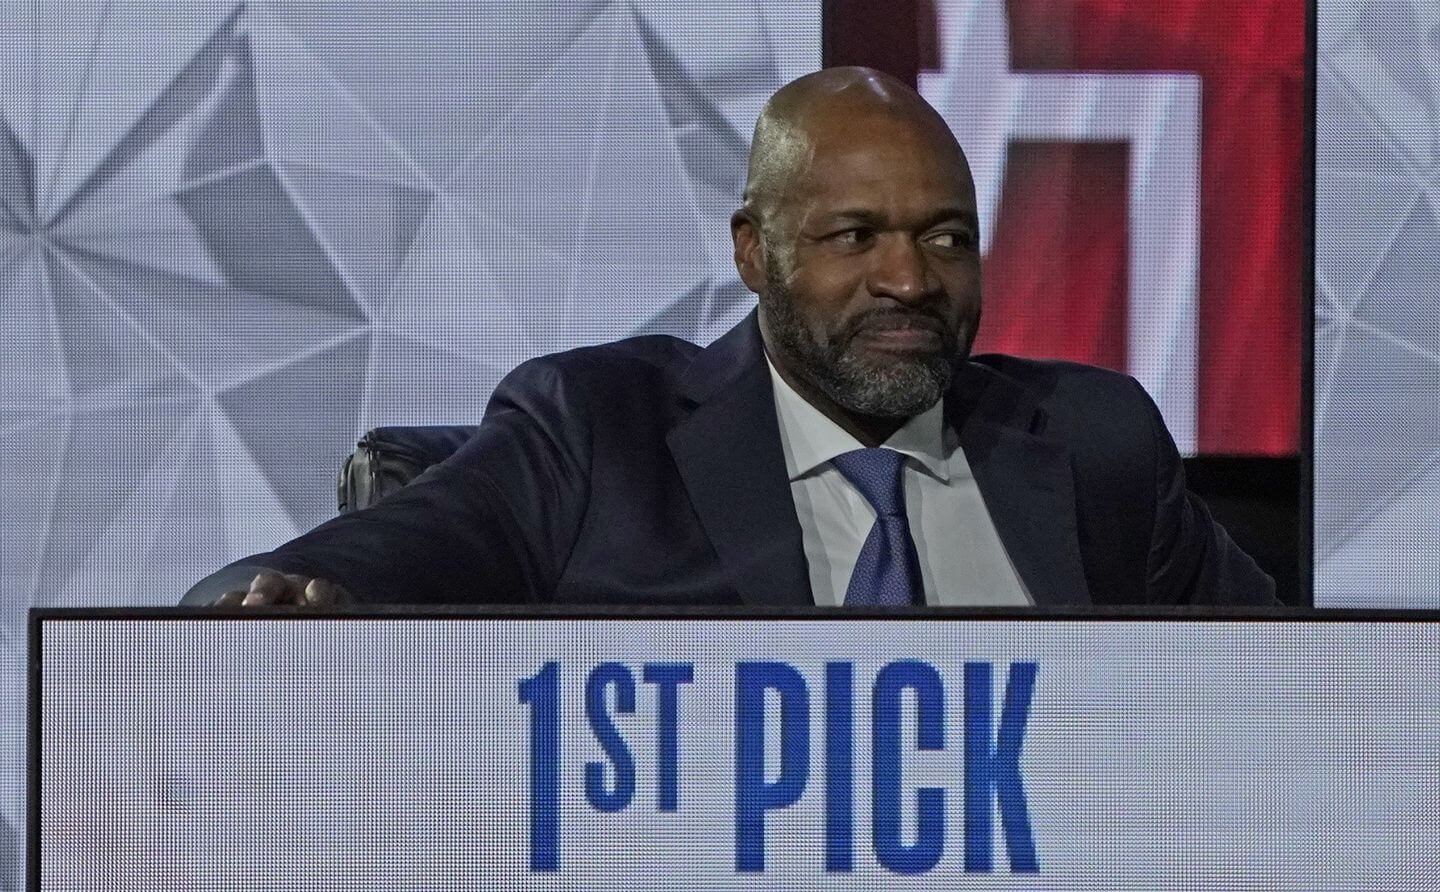 NBA Draft 2022 mock live tracker: Order, rumors, prospect rankings, news and analysis